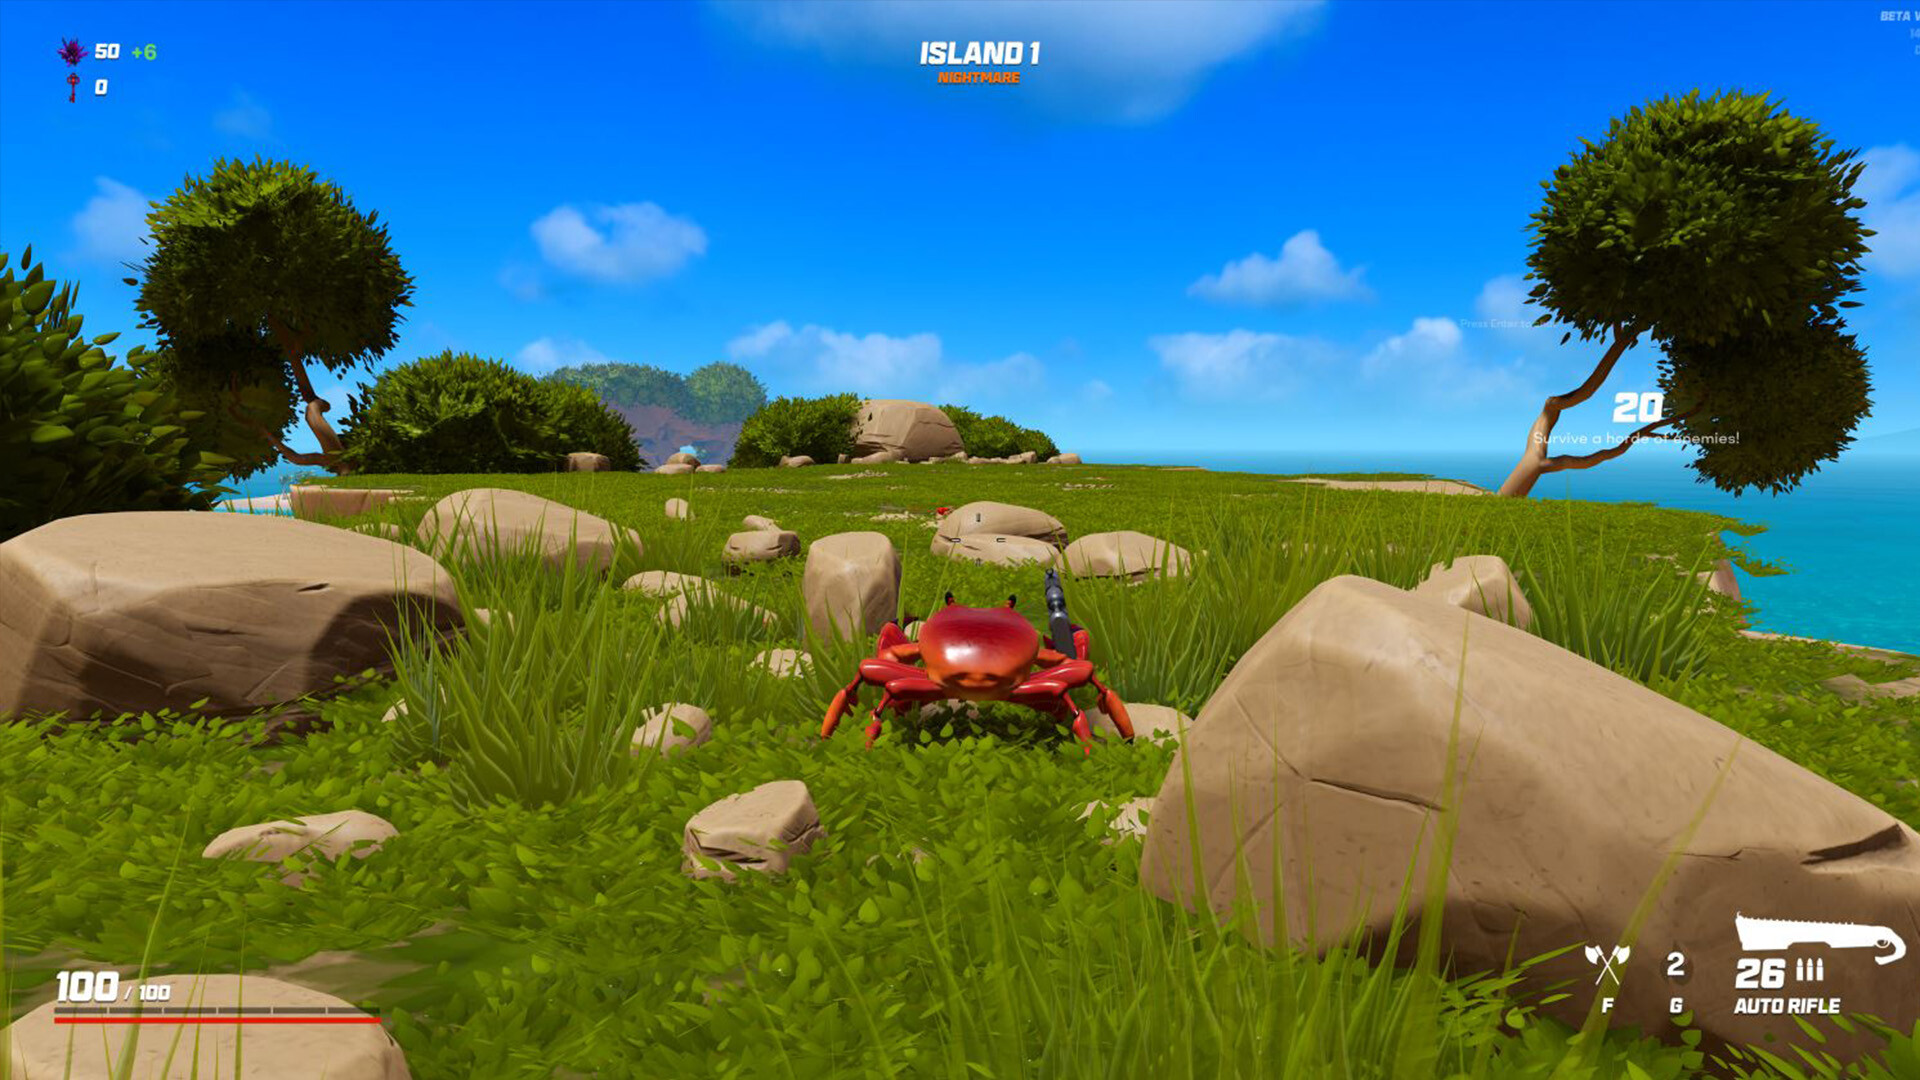 Crab Champions Steam Account, 4.73 usd